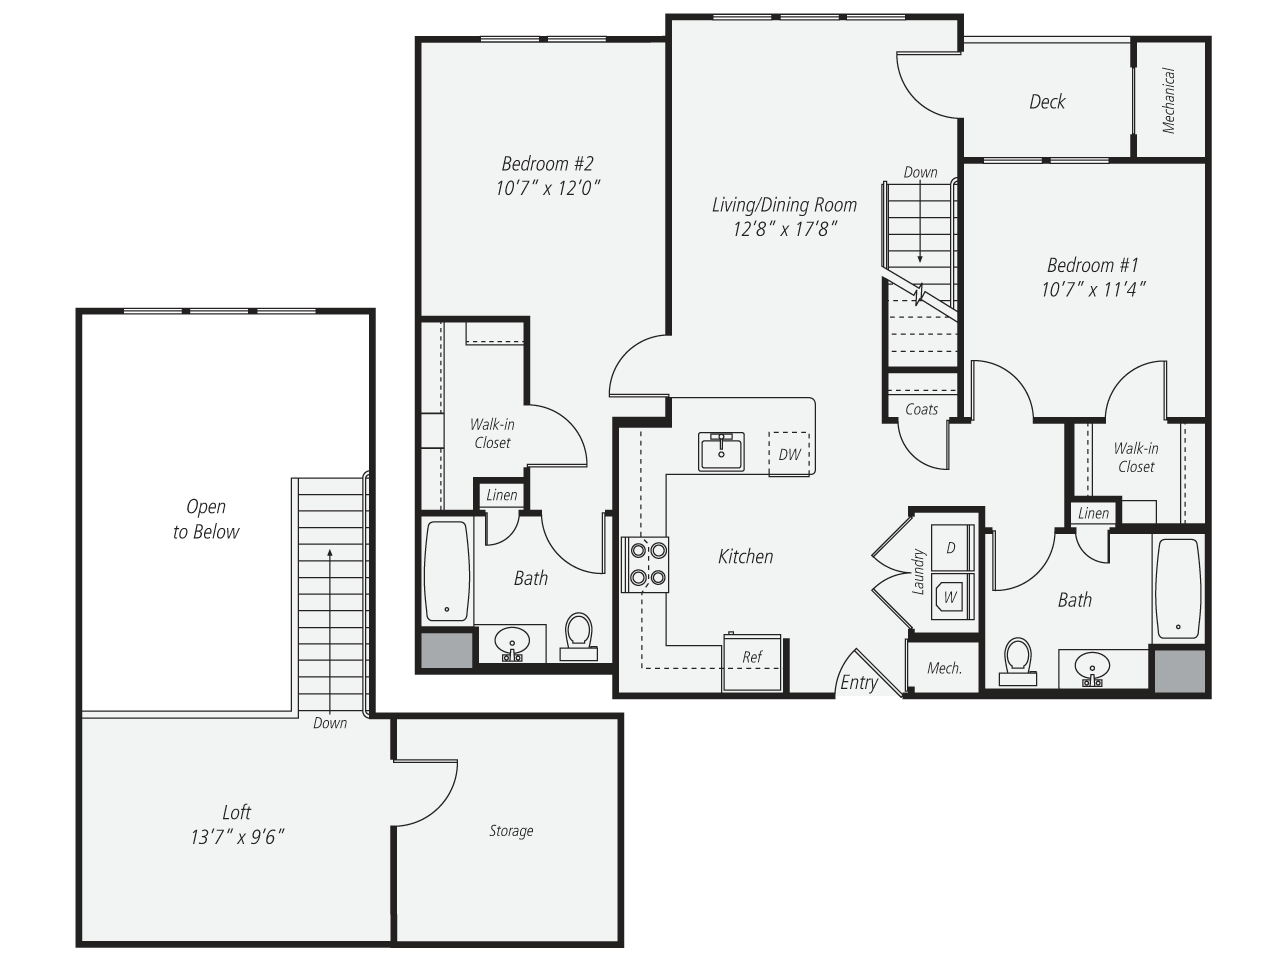 Floorplan for Apartment #415, 2 bedroom unit at Halstead Norwalk